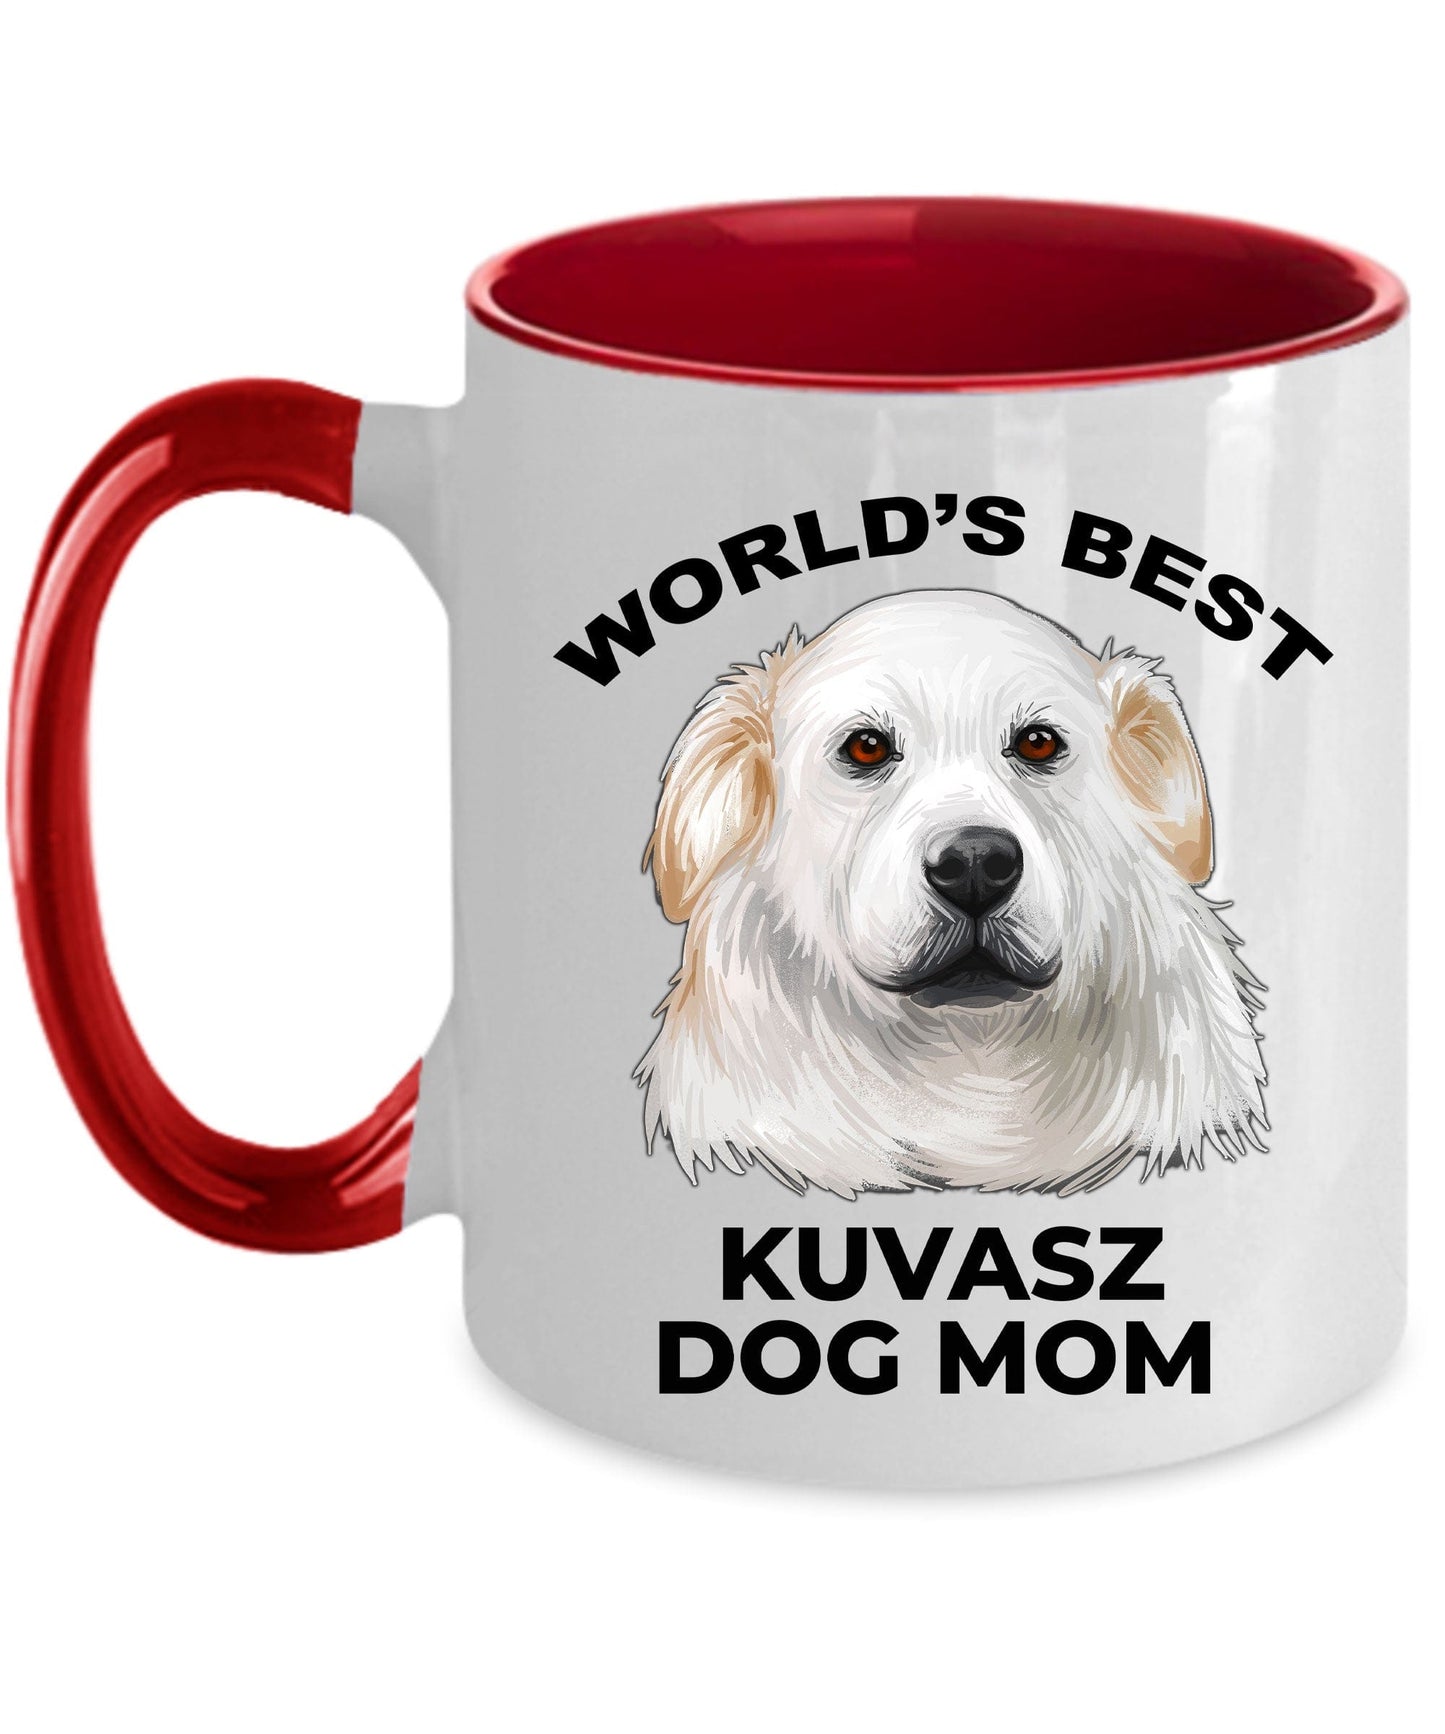 Kuvasz Best Dog Mom Ceramic and two tone color mugs